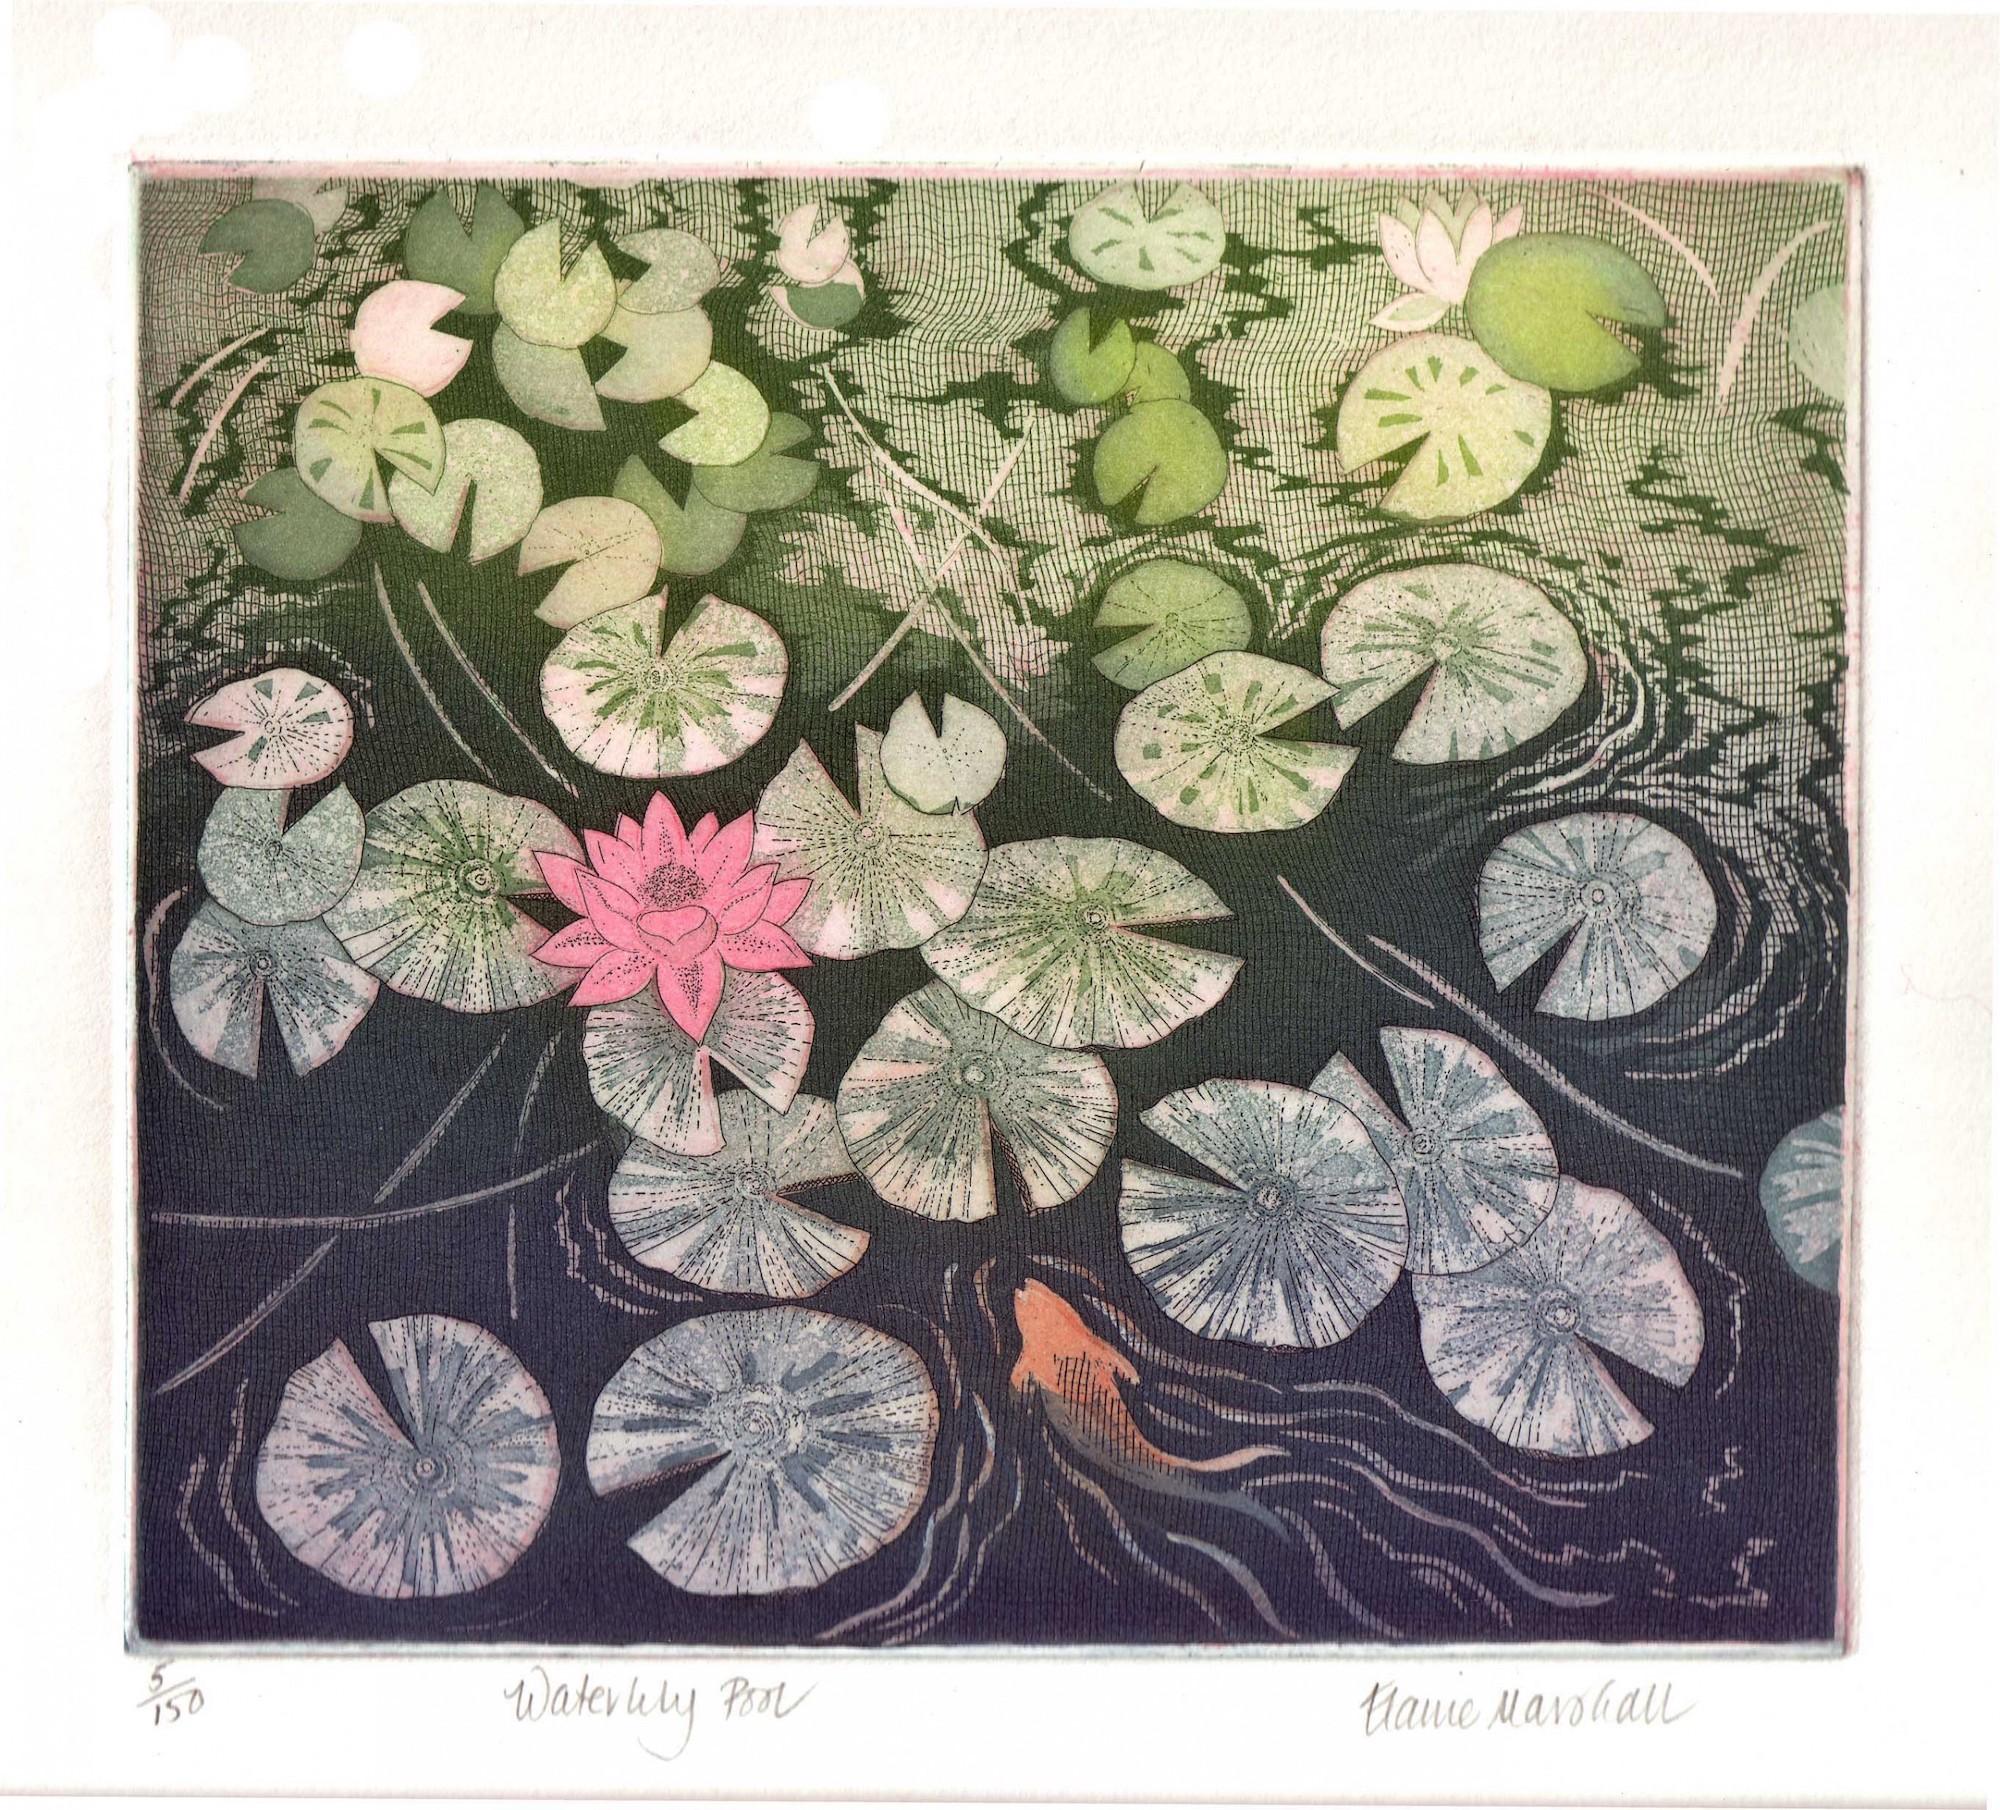 Waterlily Pool, Elaine Marshall, Limited Edition Animal Print, Handmade Prints